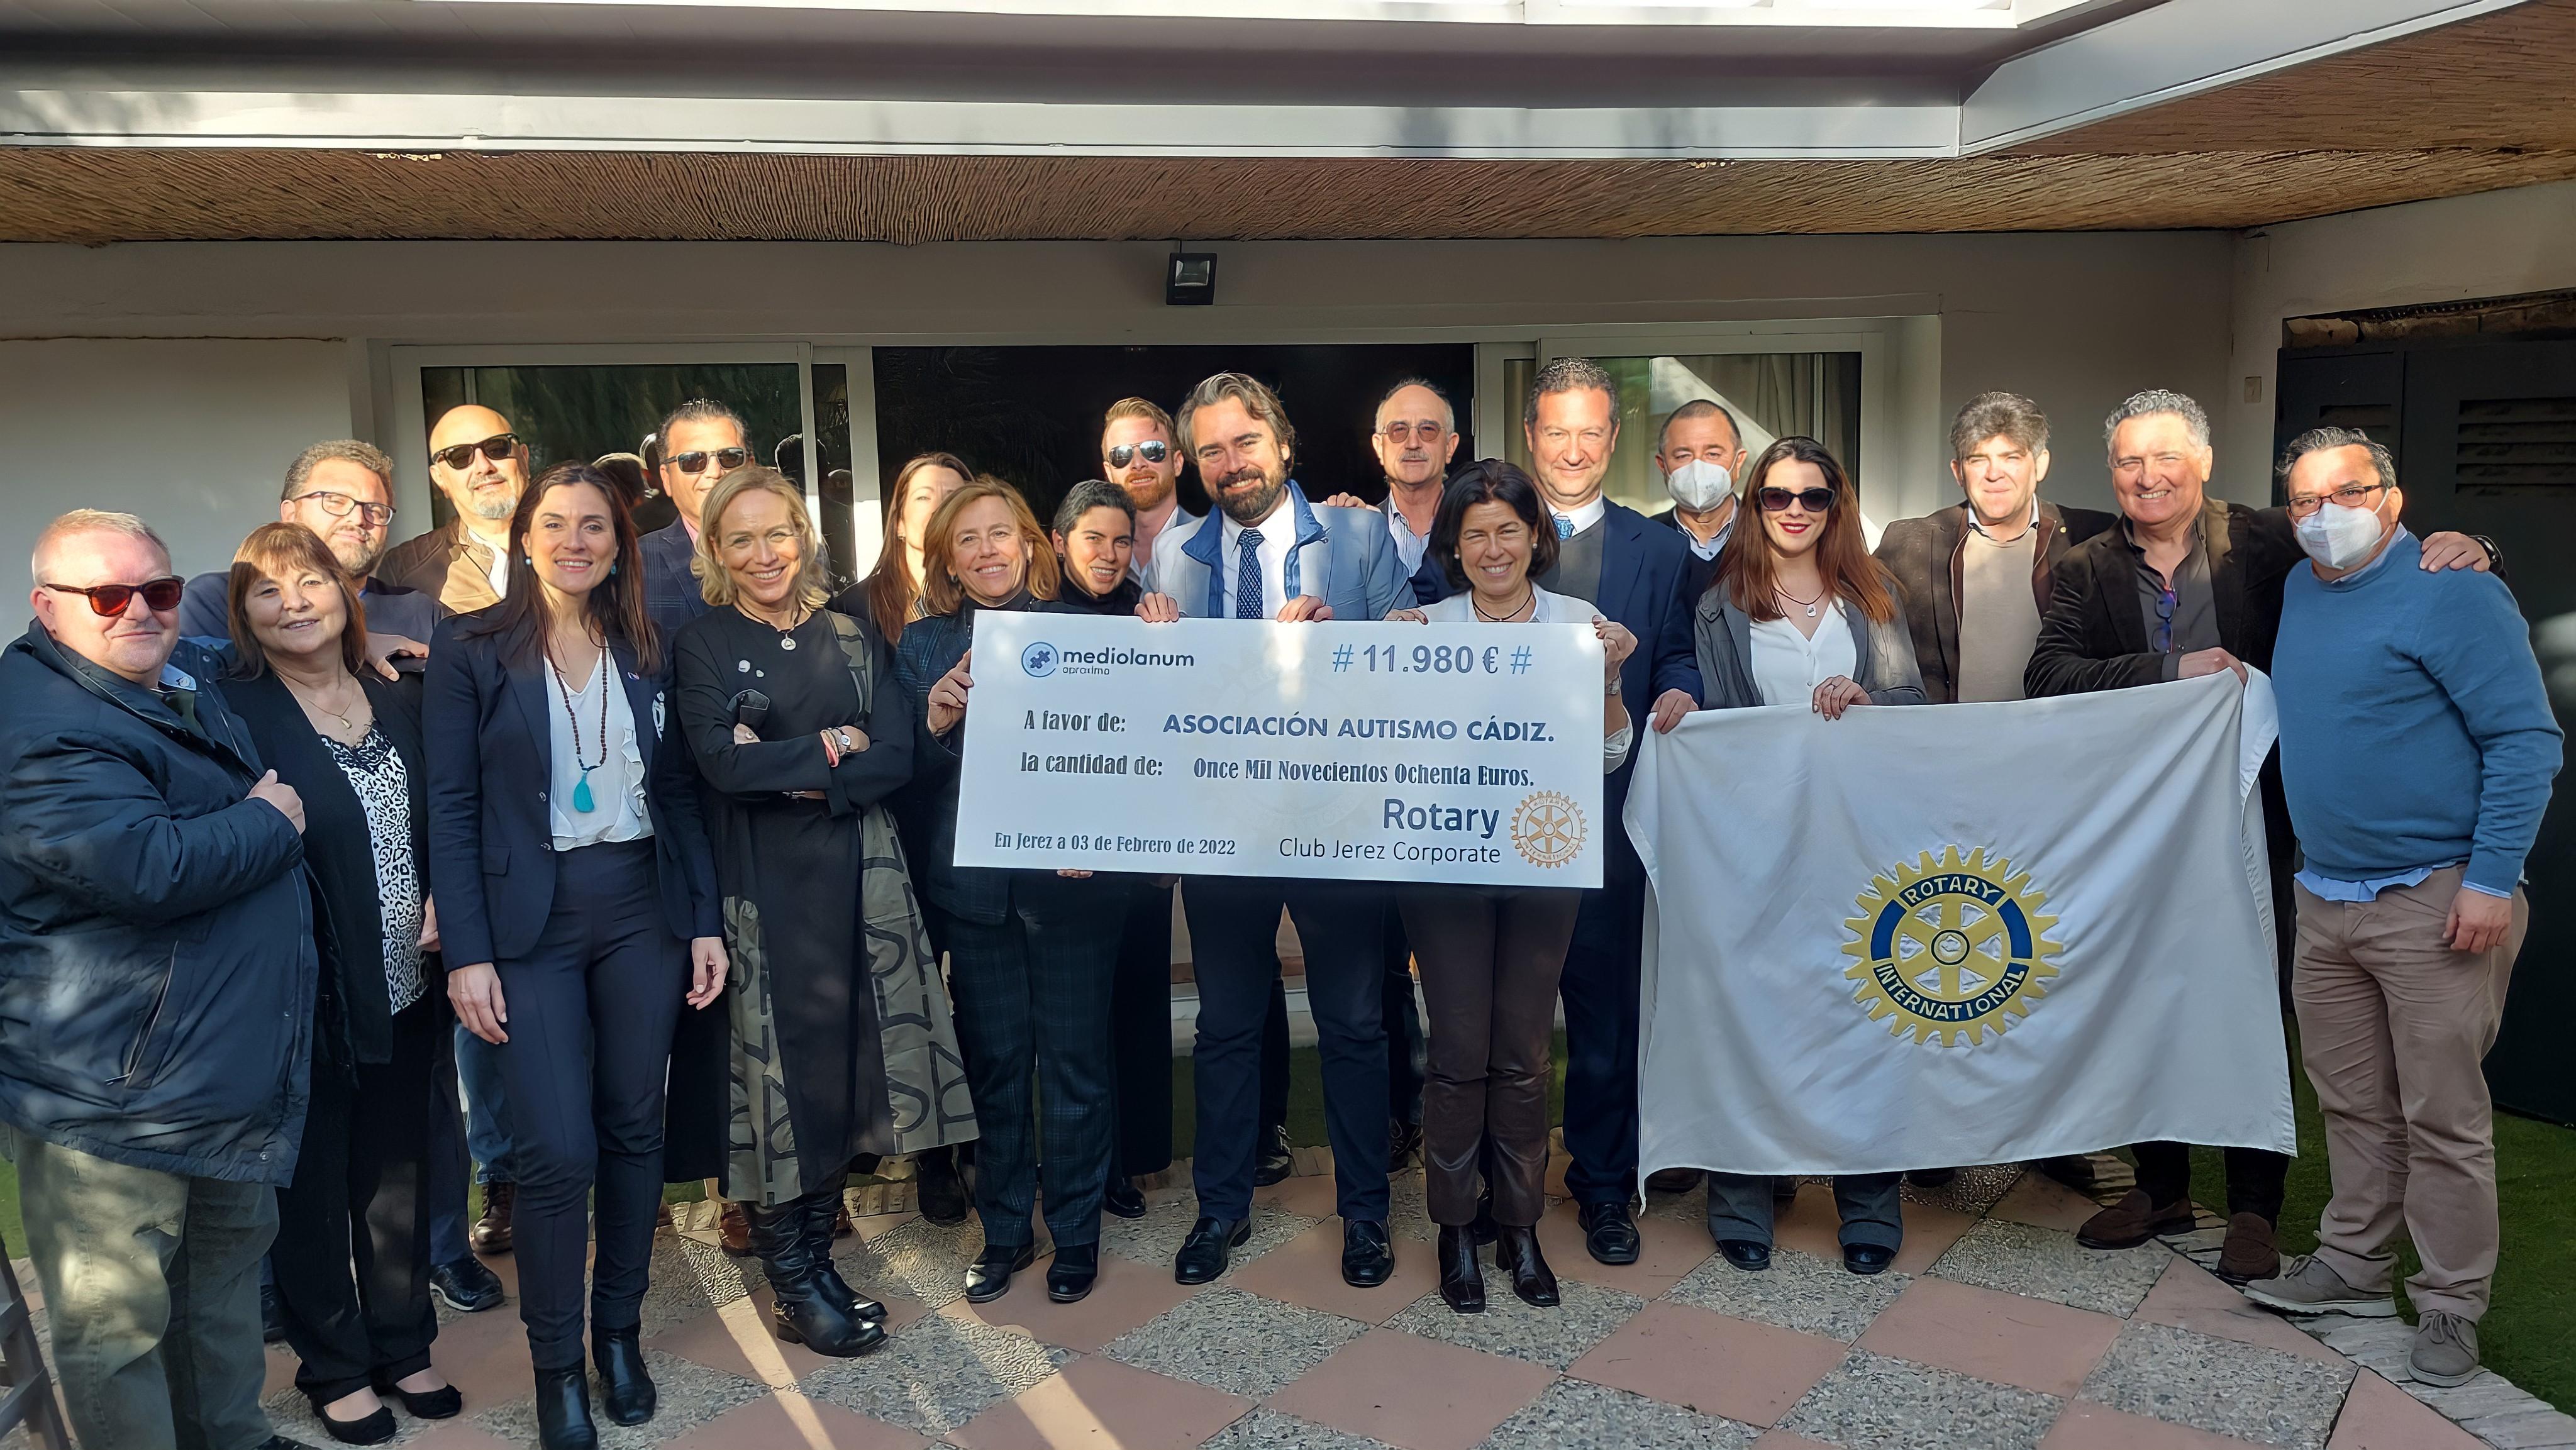 El Rotary Club Jerez Corporate entrega 12.000 euros a Autismo Cádiz